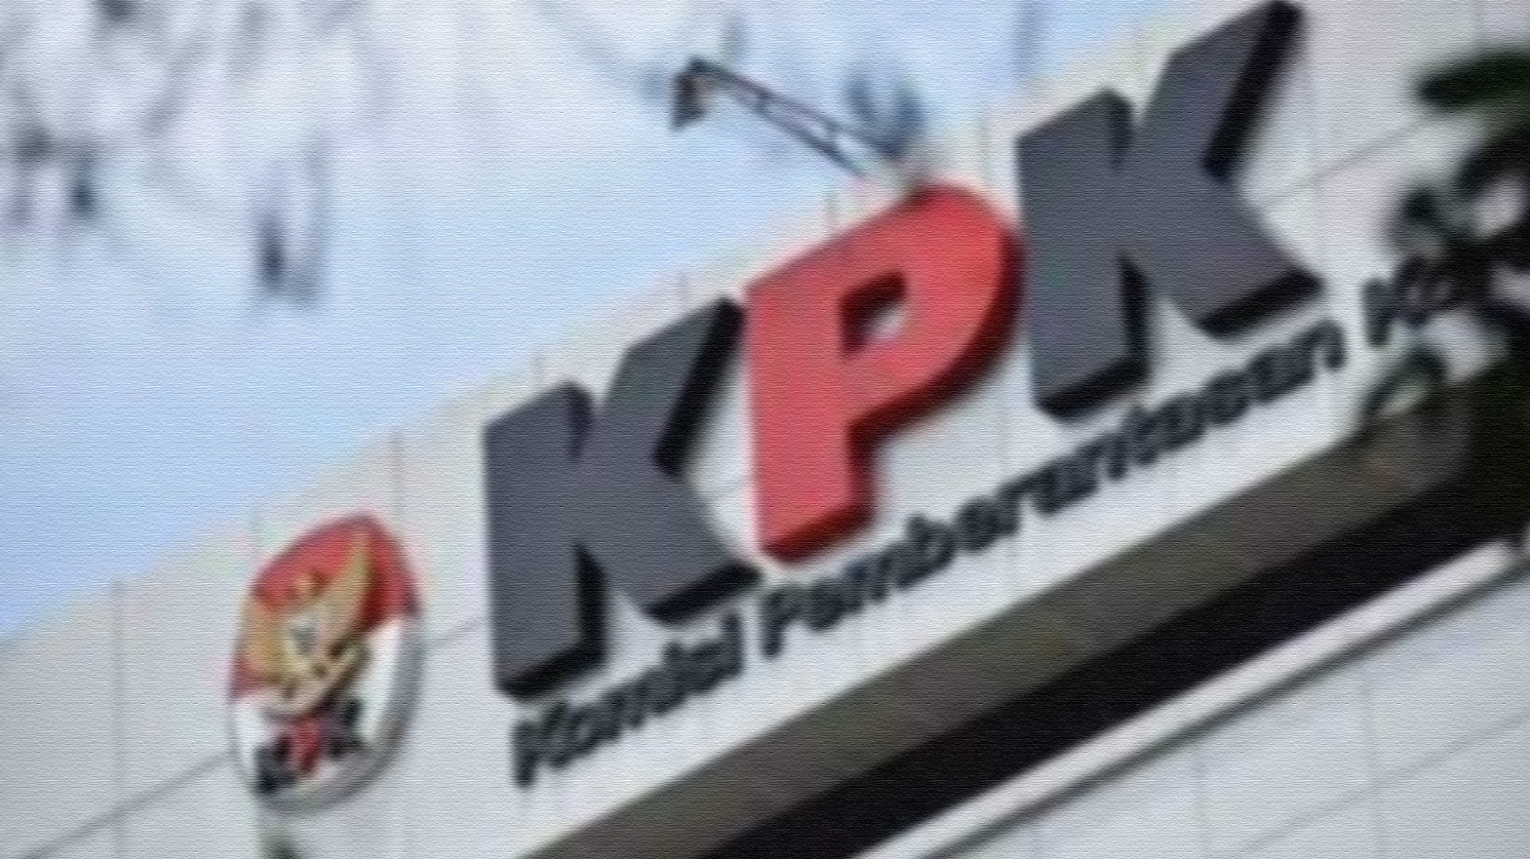 KPK selidiki aliran dana dugaan suap hakim di PN Surabaya. (Foto: Ilustrasi)